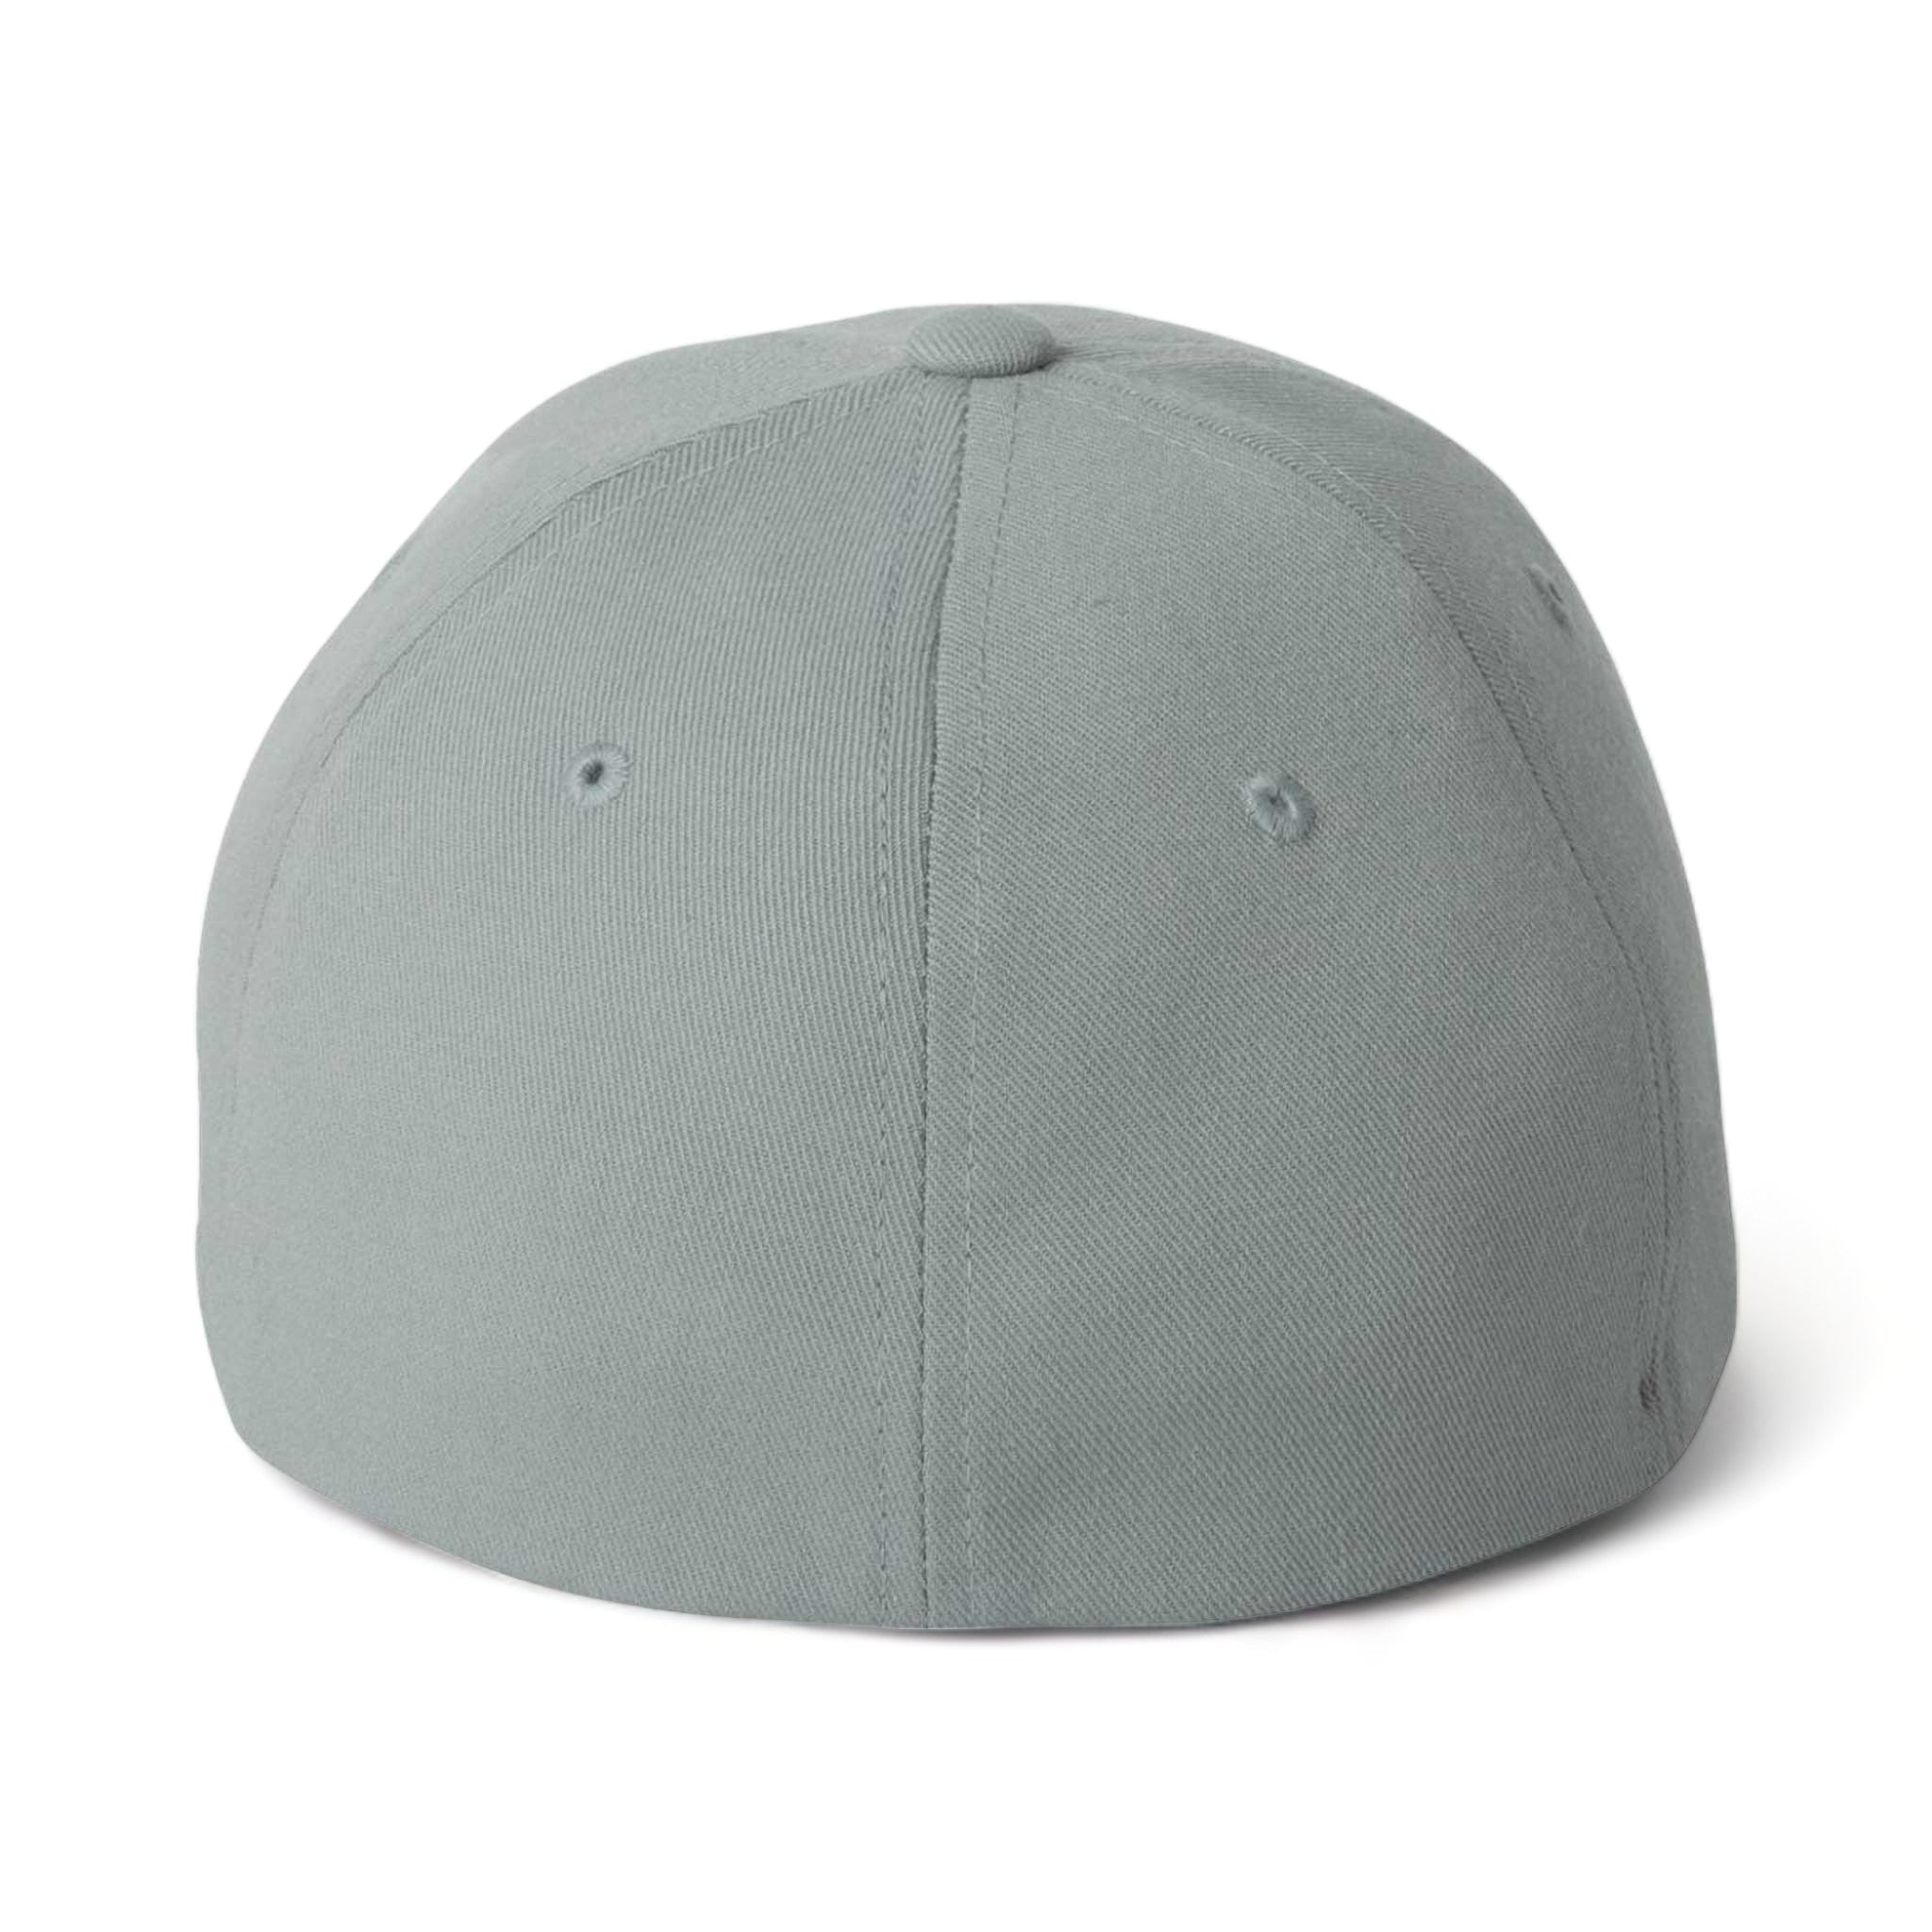 Back view of Flexfit 6580 custom hat in grey